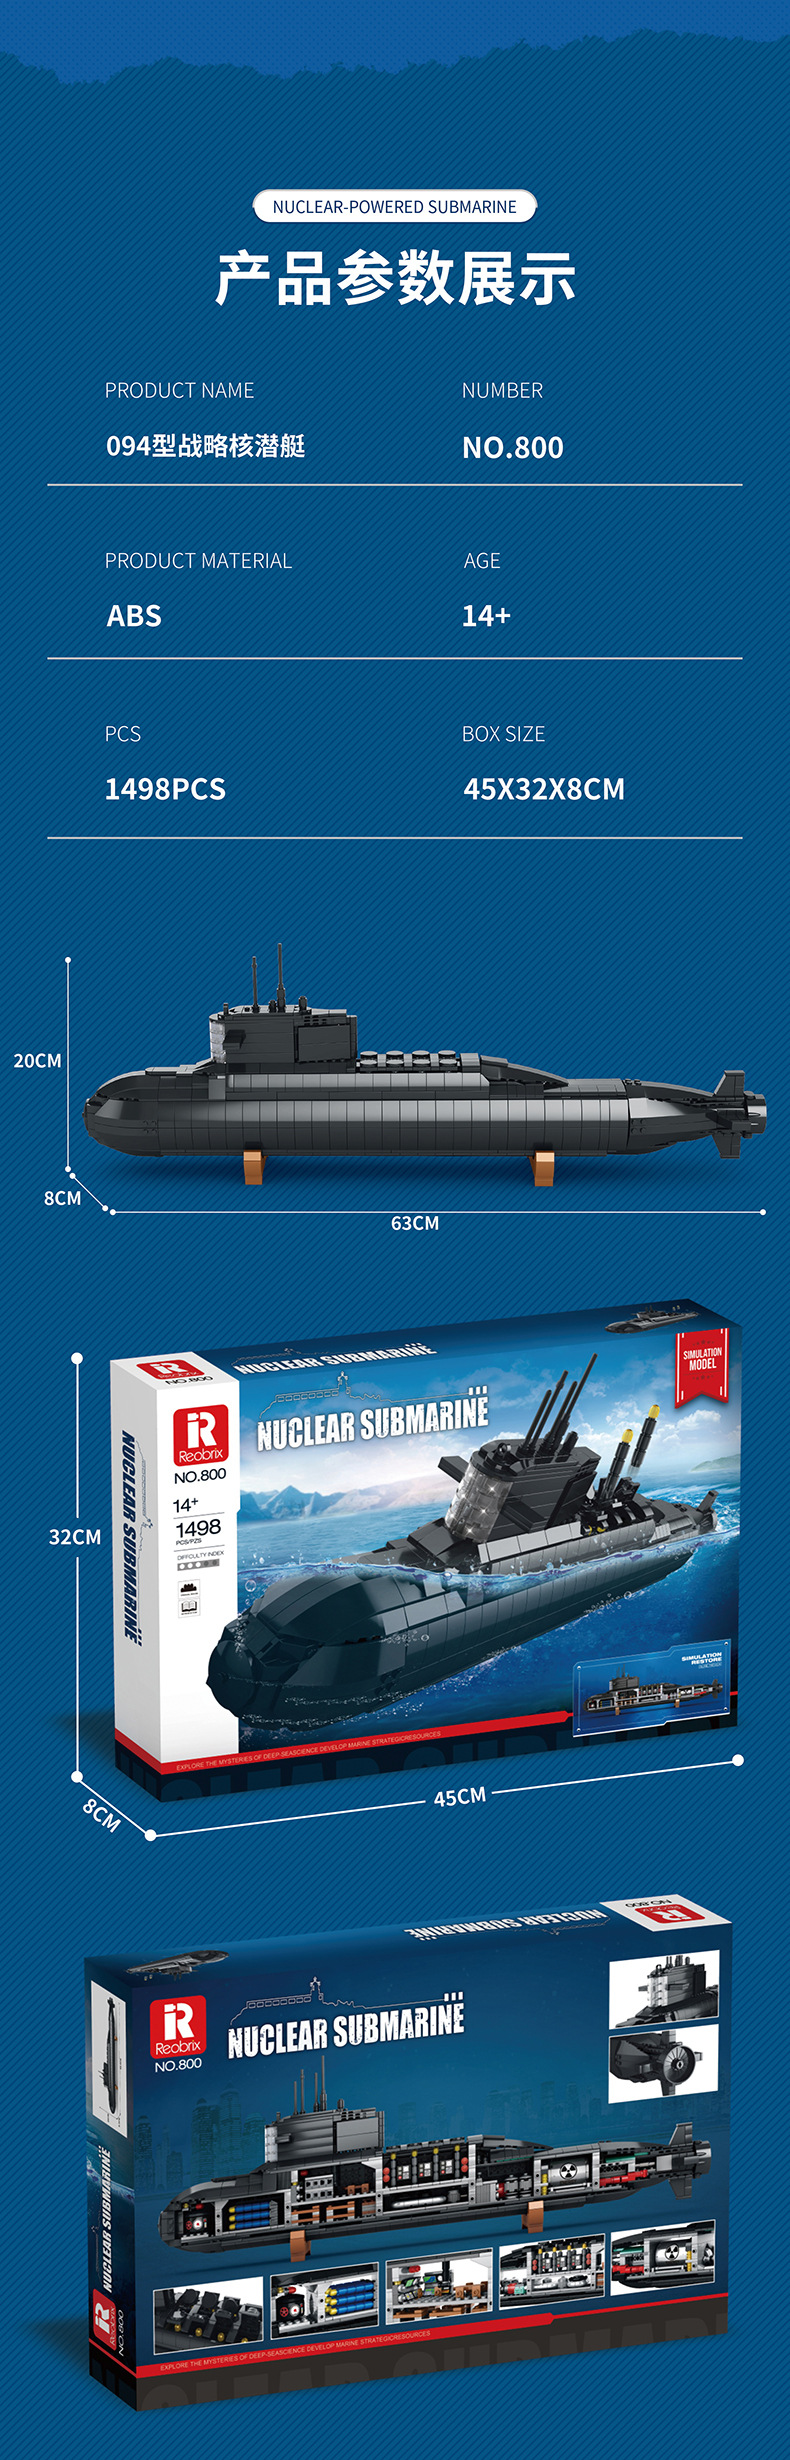 REOBRIX 800 Strategic Nuclear Submarine Military Series Bausteine Spielzeugset